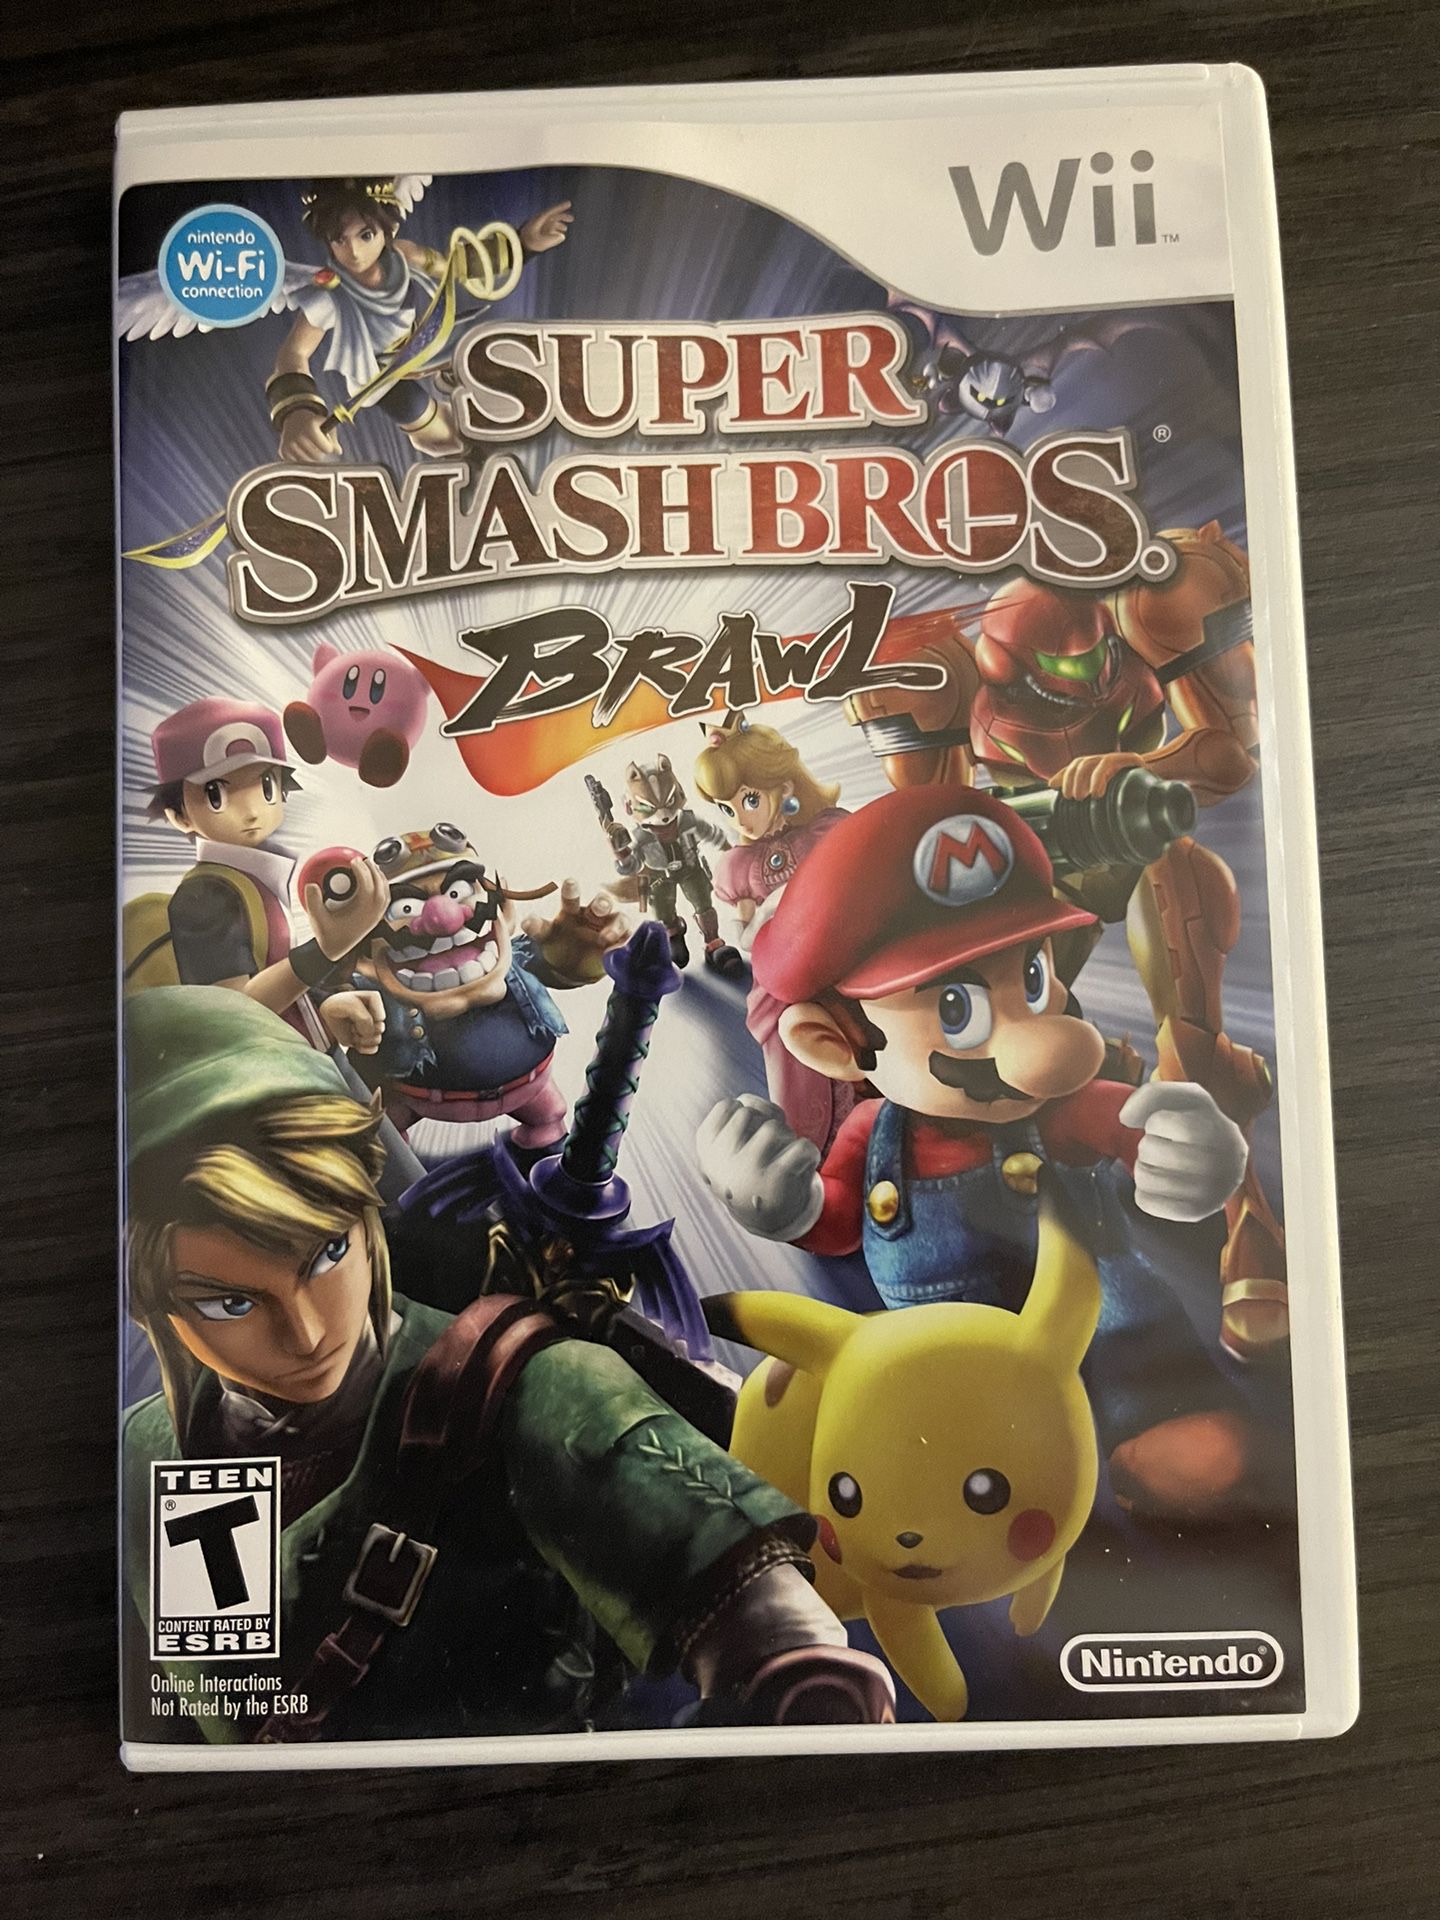 Super Smash Bros brawl On Nintendo Wii